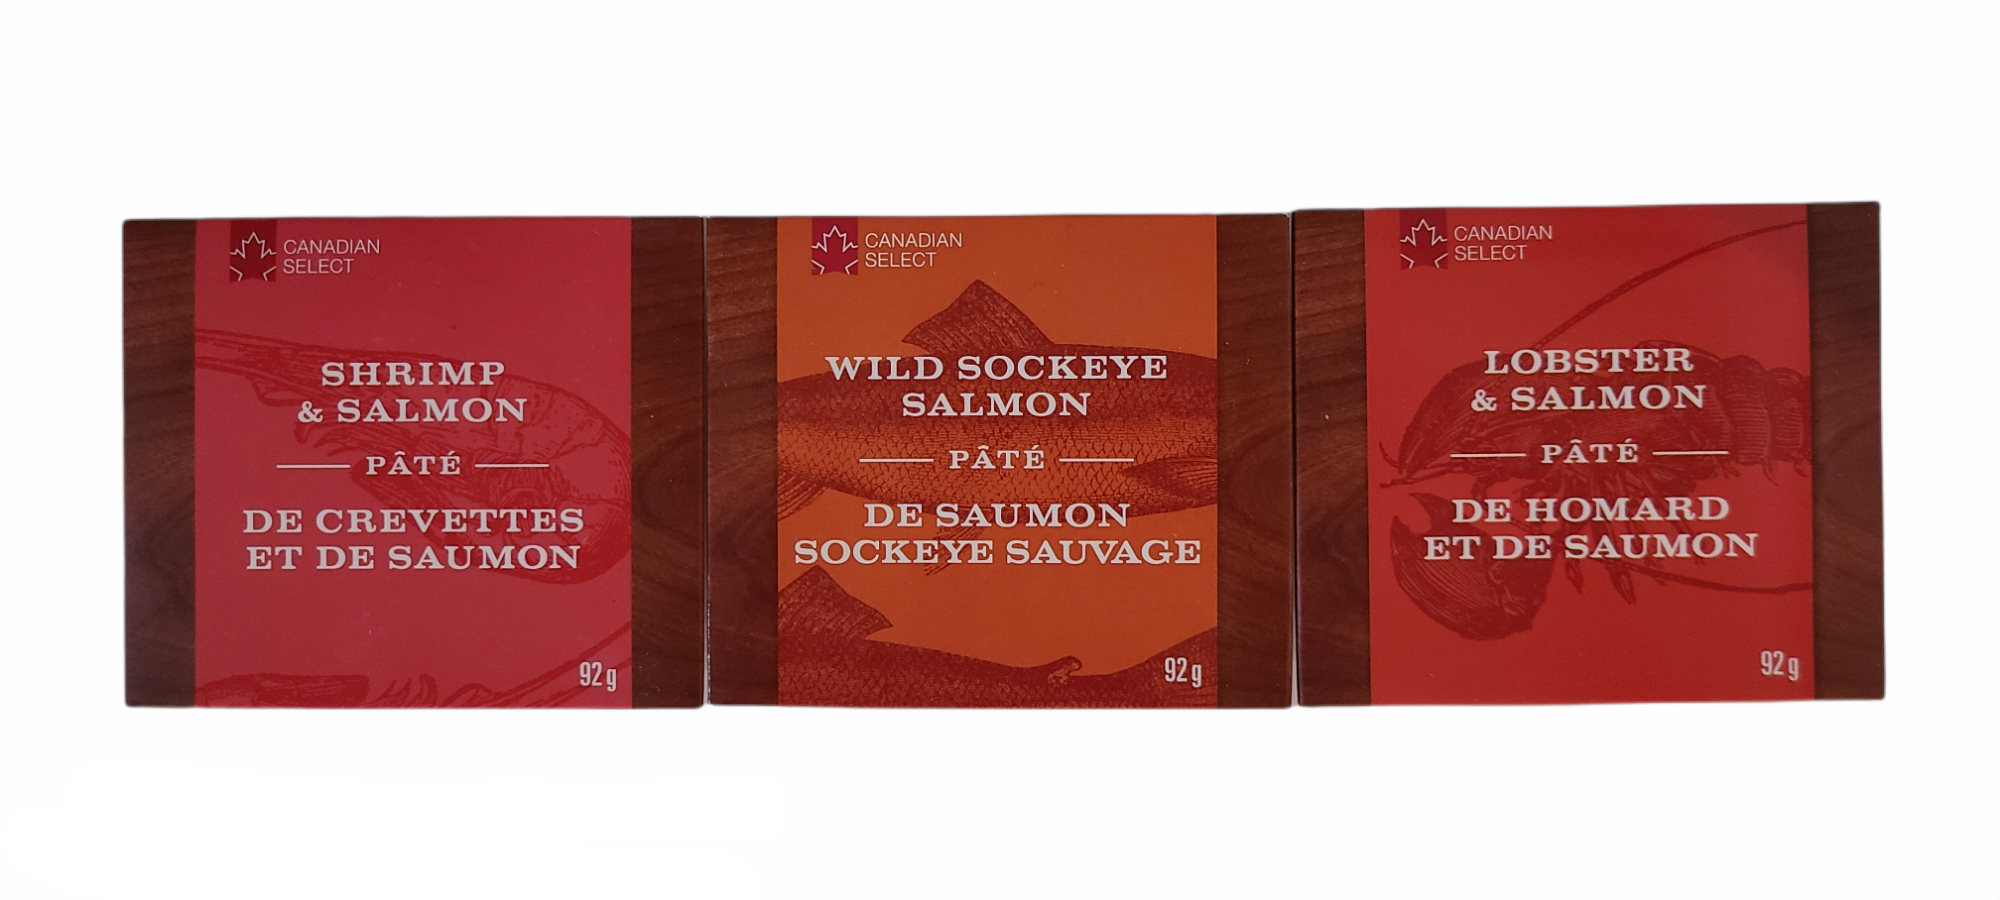 Pate Spread: Lobster & Salmon / Shrimp & Salmon / Wild Sockeye Salmon